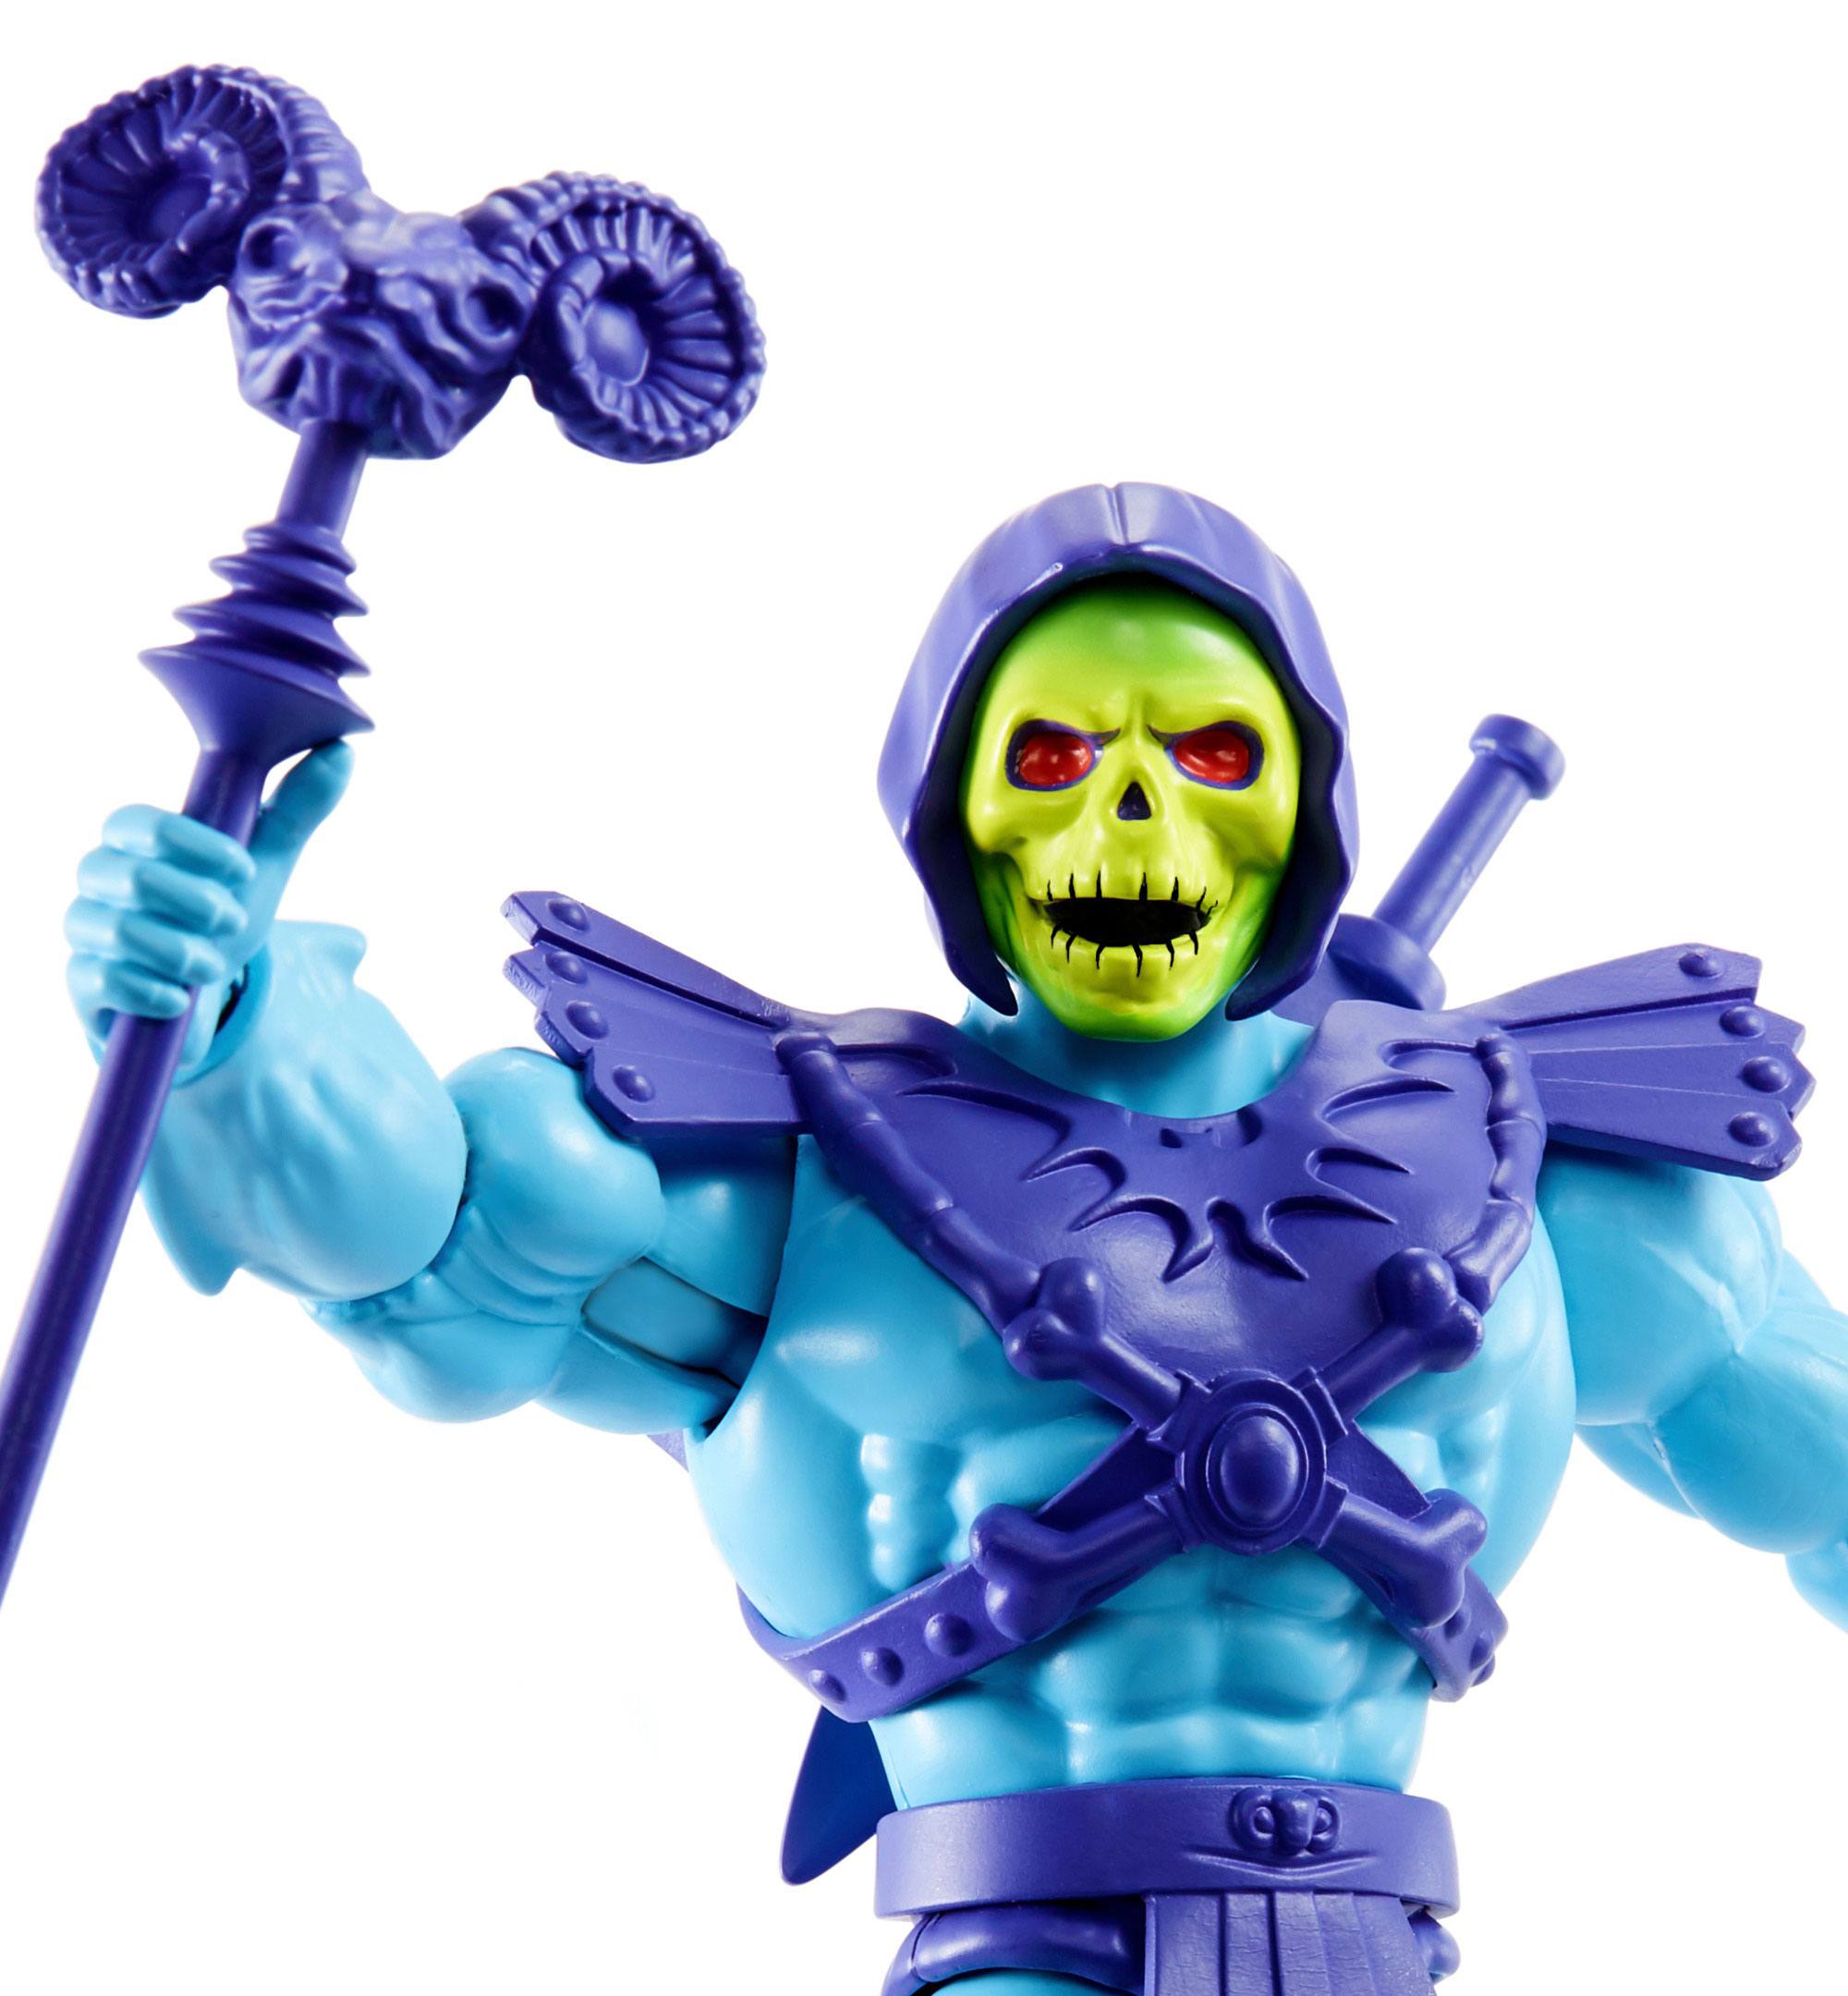 Masters of the Universe Origins Actionfigur 2020 Skeletor 14 cm MATTGNN88 0887961875409 